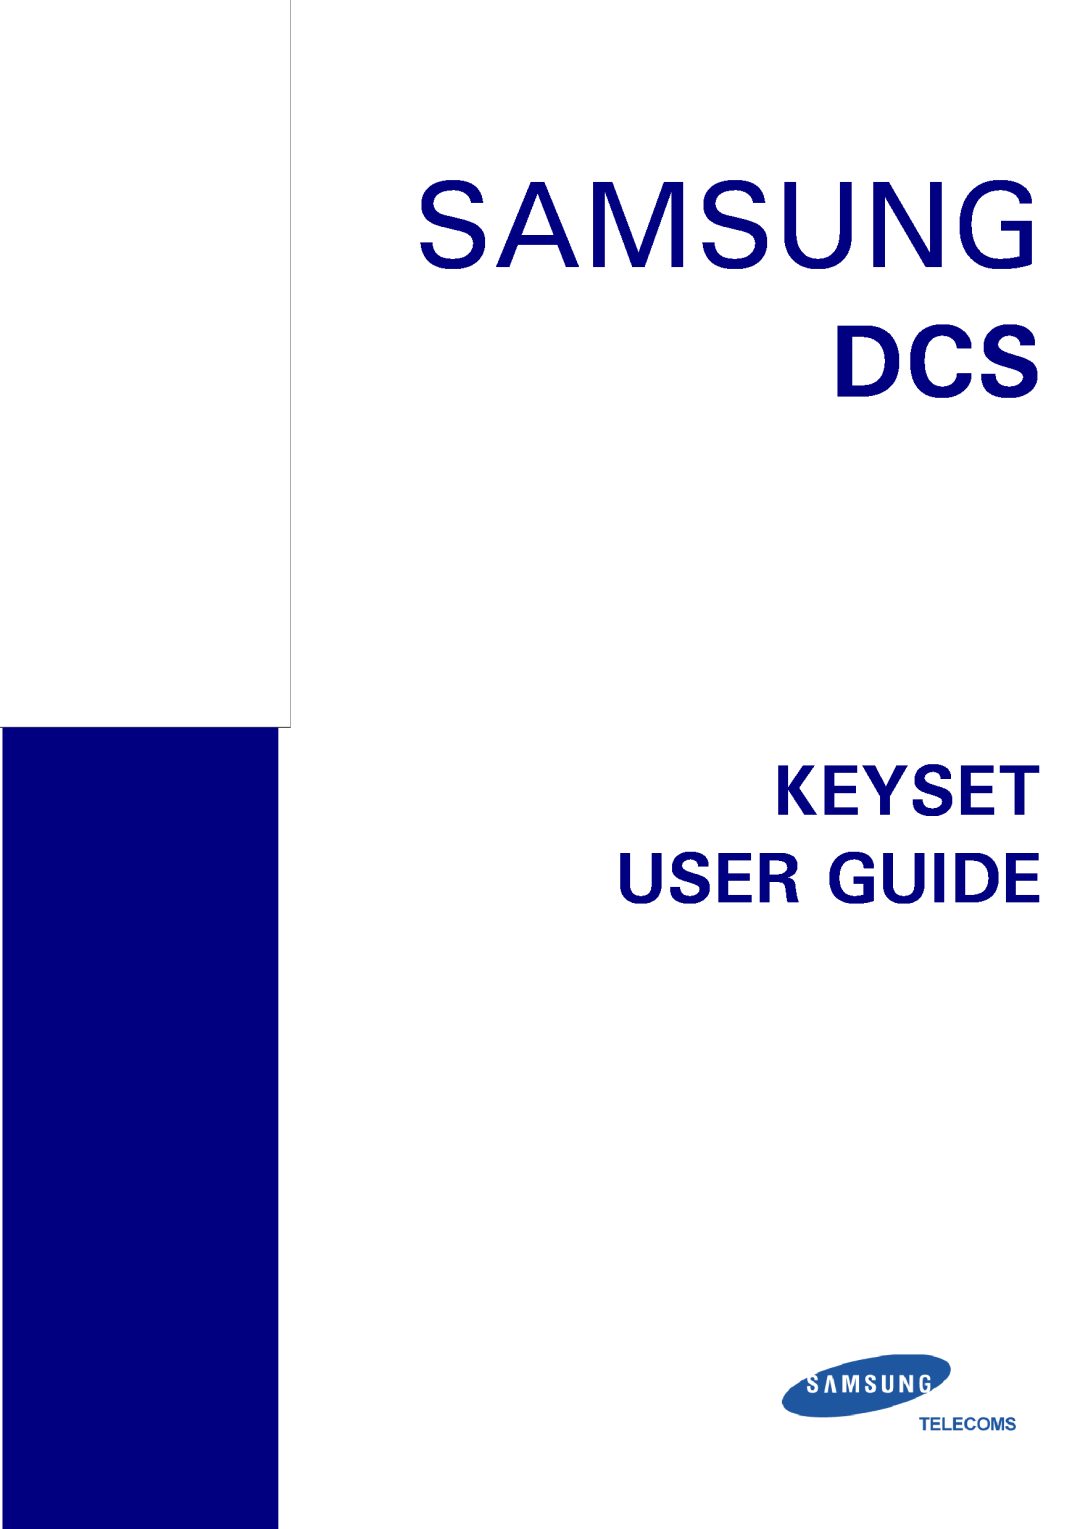 Samsung DCS KEYSET manual Samsung, Keyset User Guide 